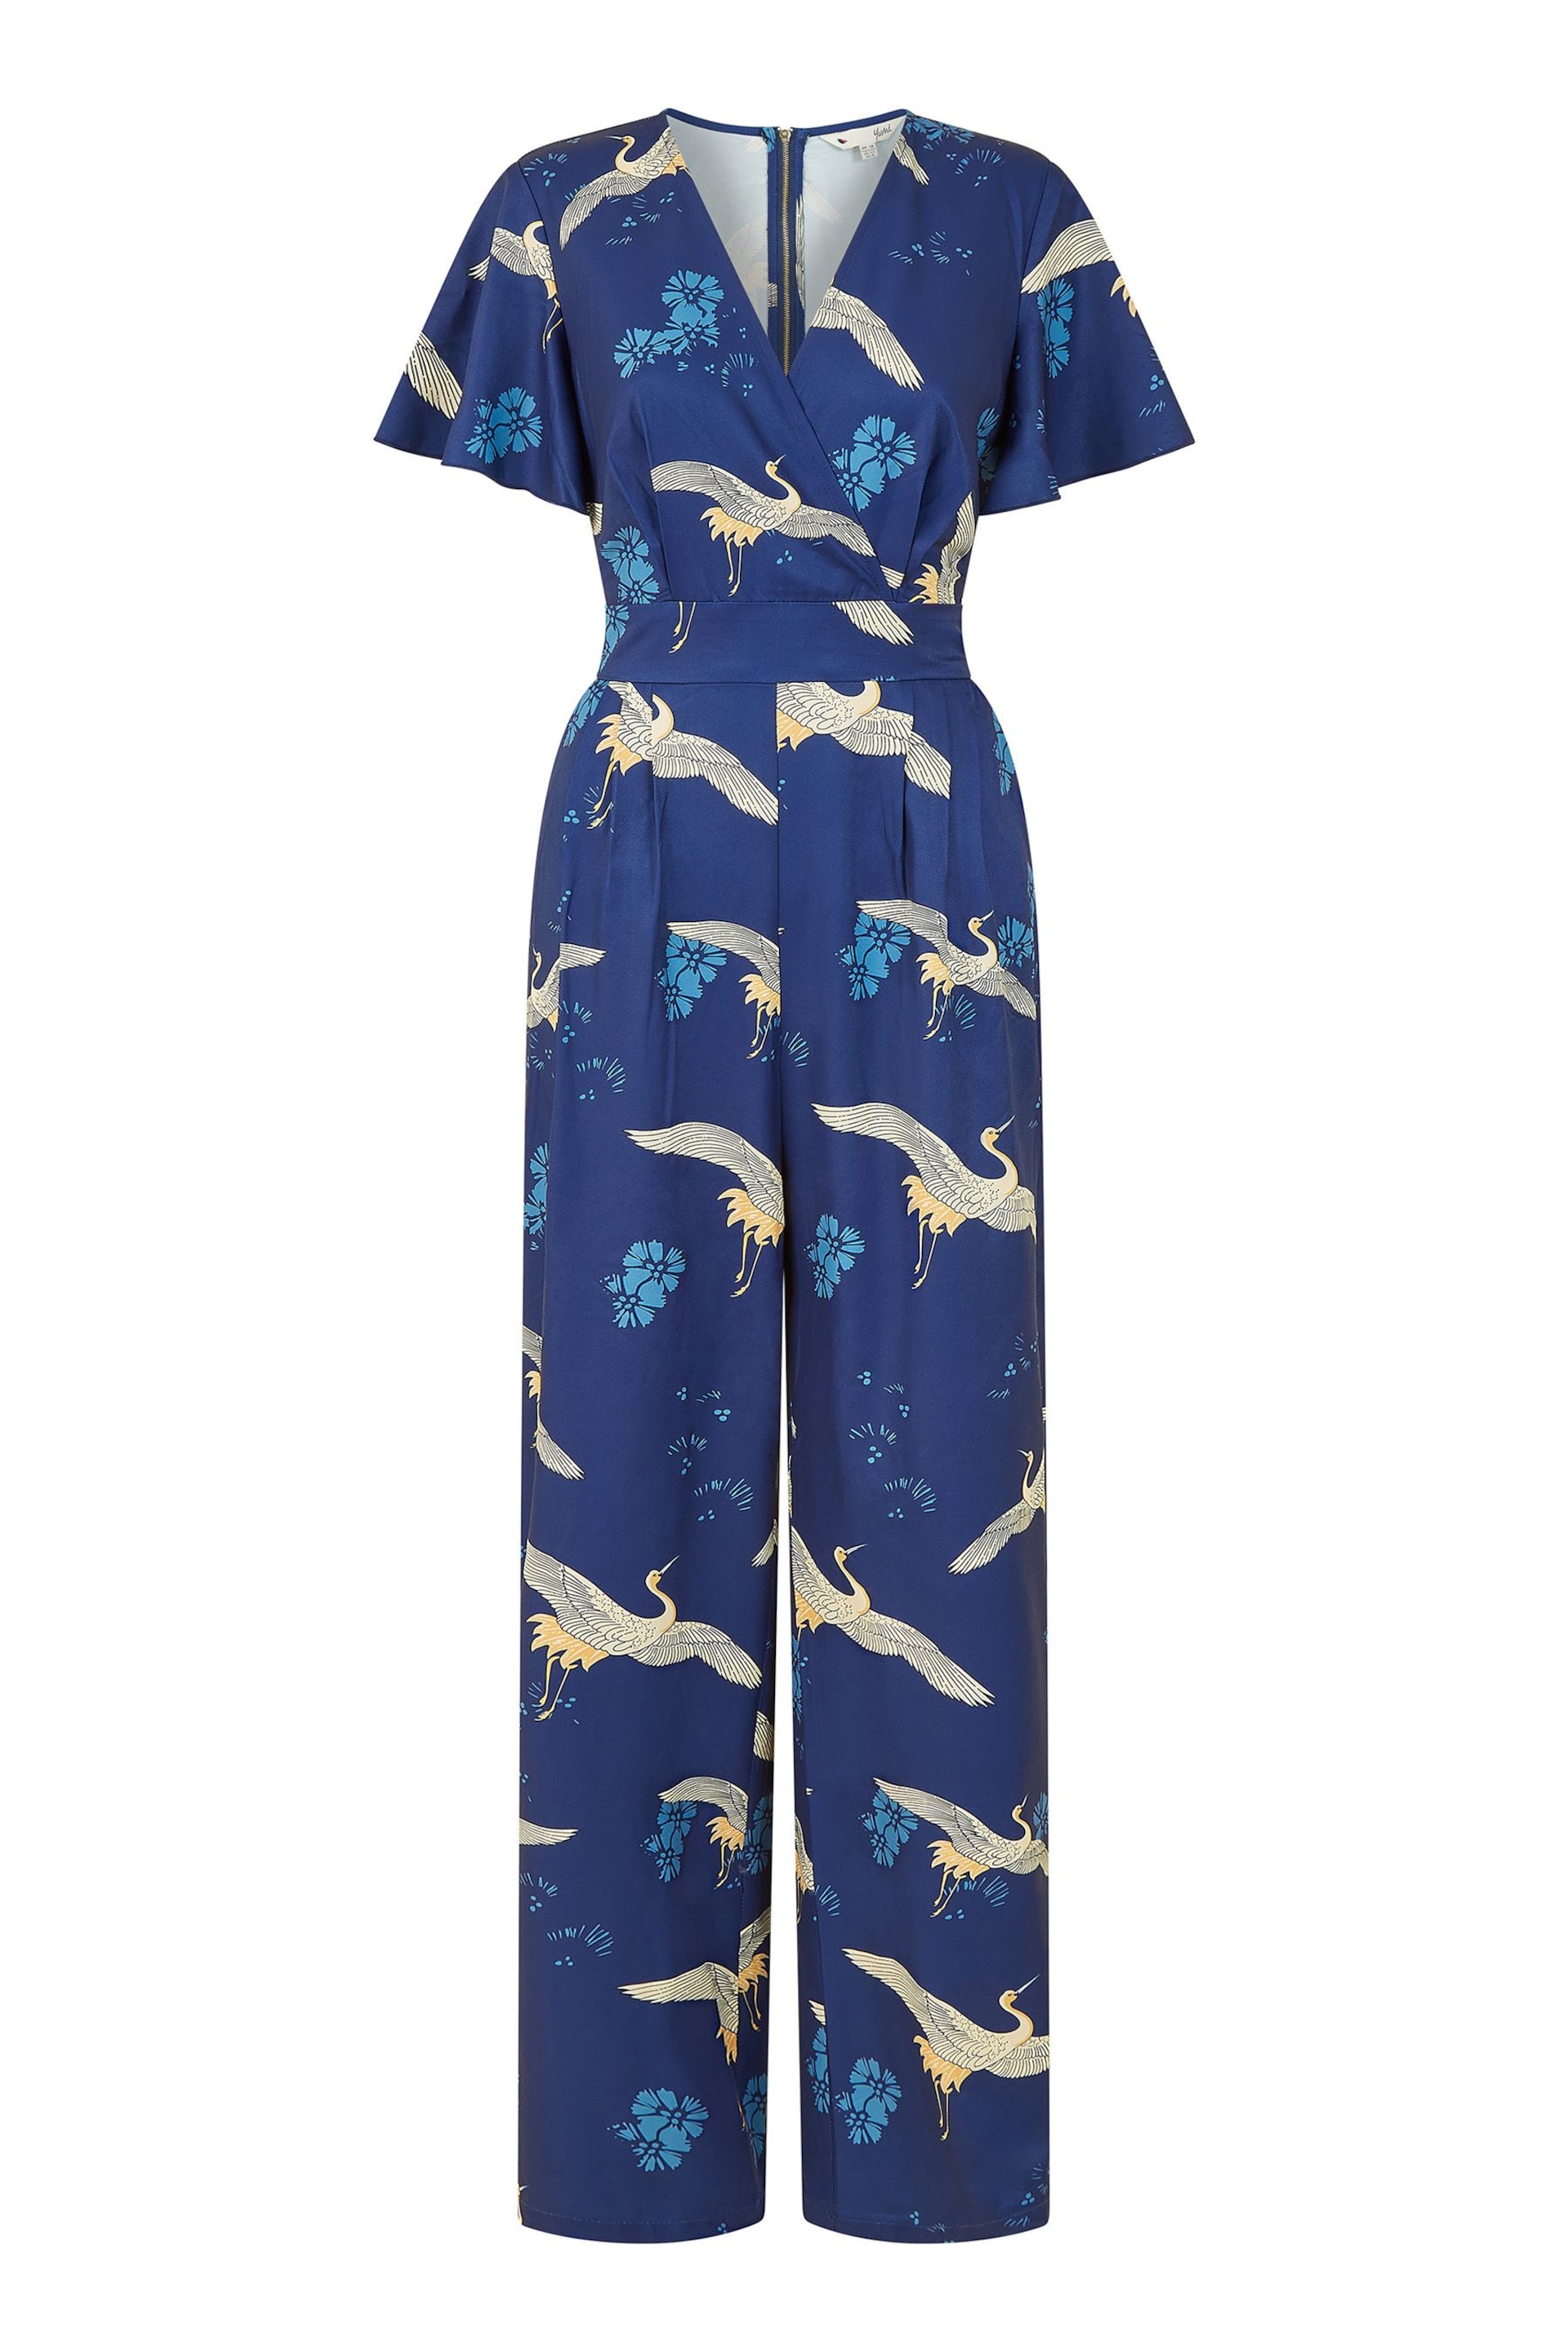 Yumi Blue Crane Print Jumpsuit - Image 5 of 5